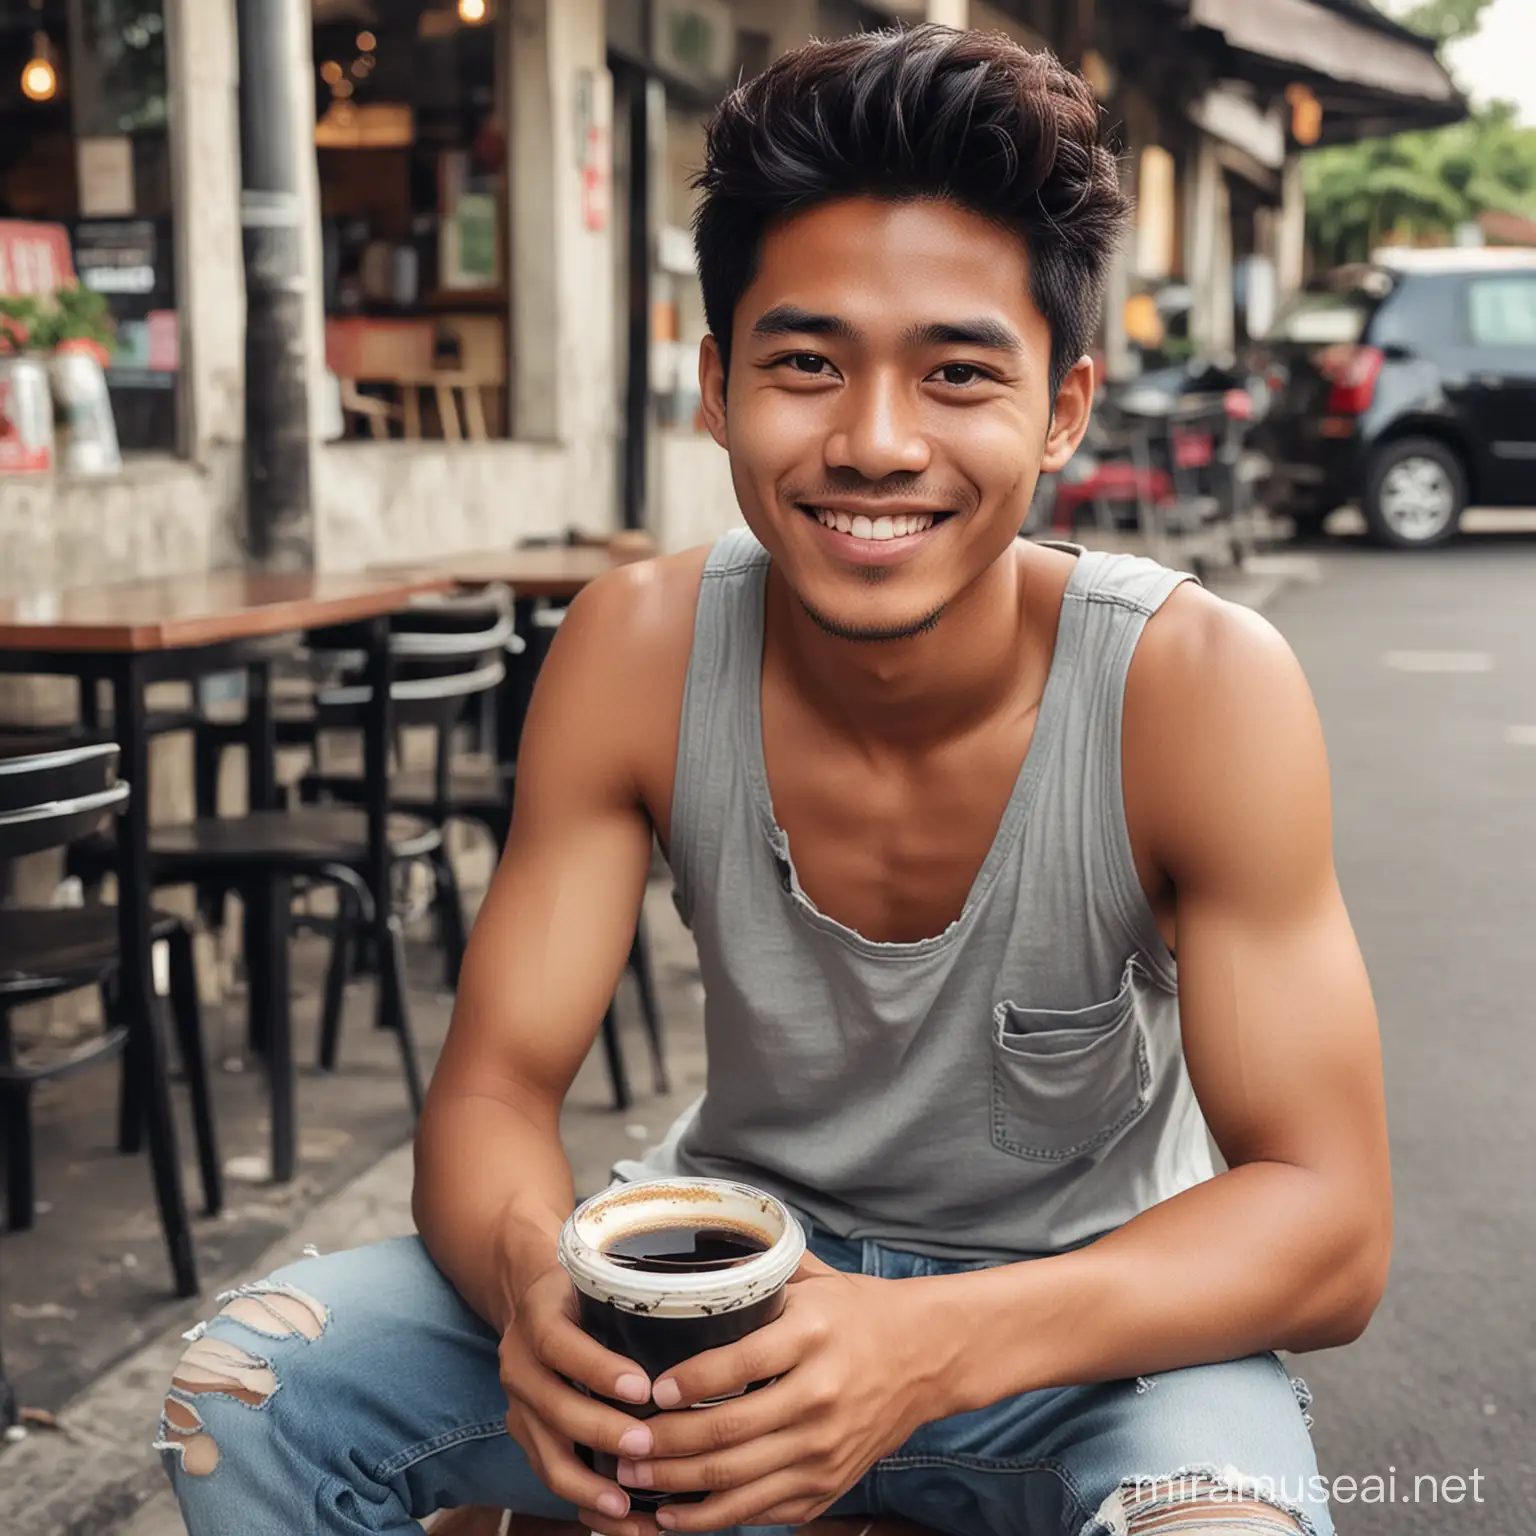 Foto pria indonesia umur 25 tahun,rambut undercute,mengenakan kaos tanpa lengan,dengan celana jeans robek,dengan tangan memegang segelas kopi hitam panas,duduk santai di kedai kopi pinggir jalan,efek wajah tersenyum